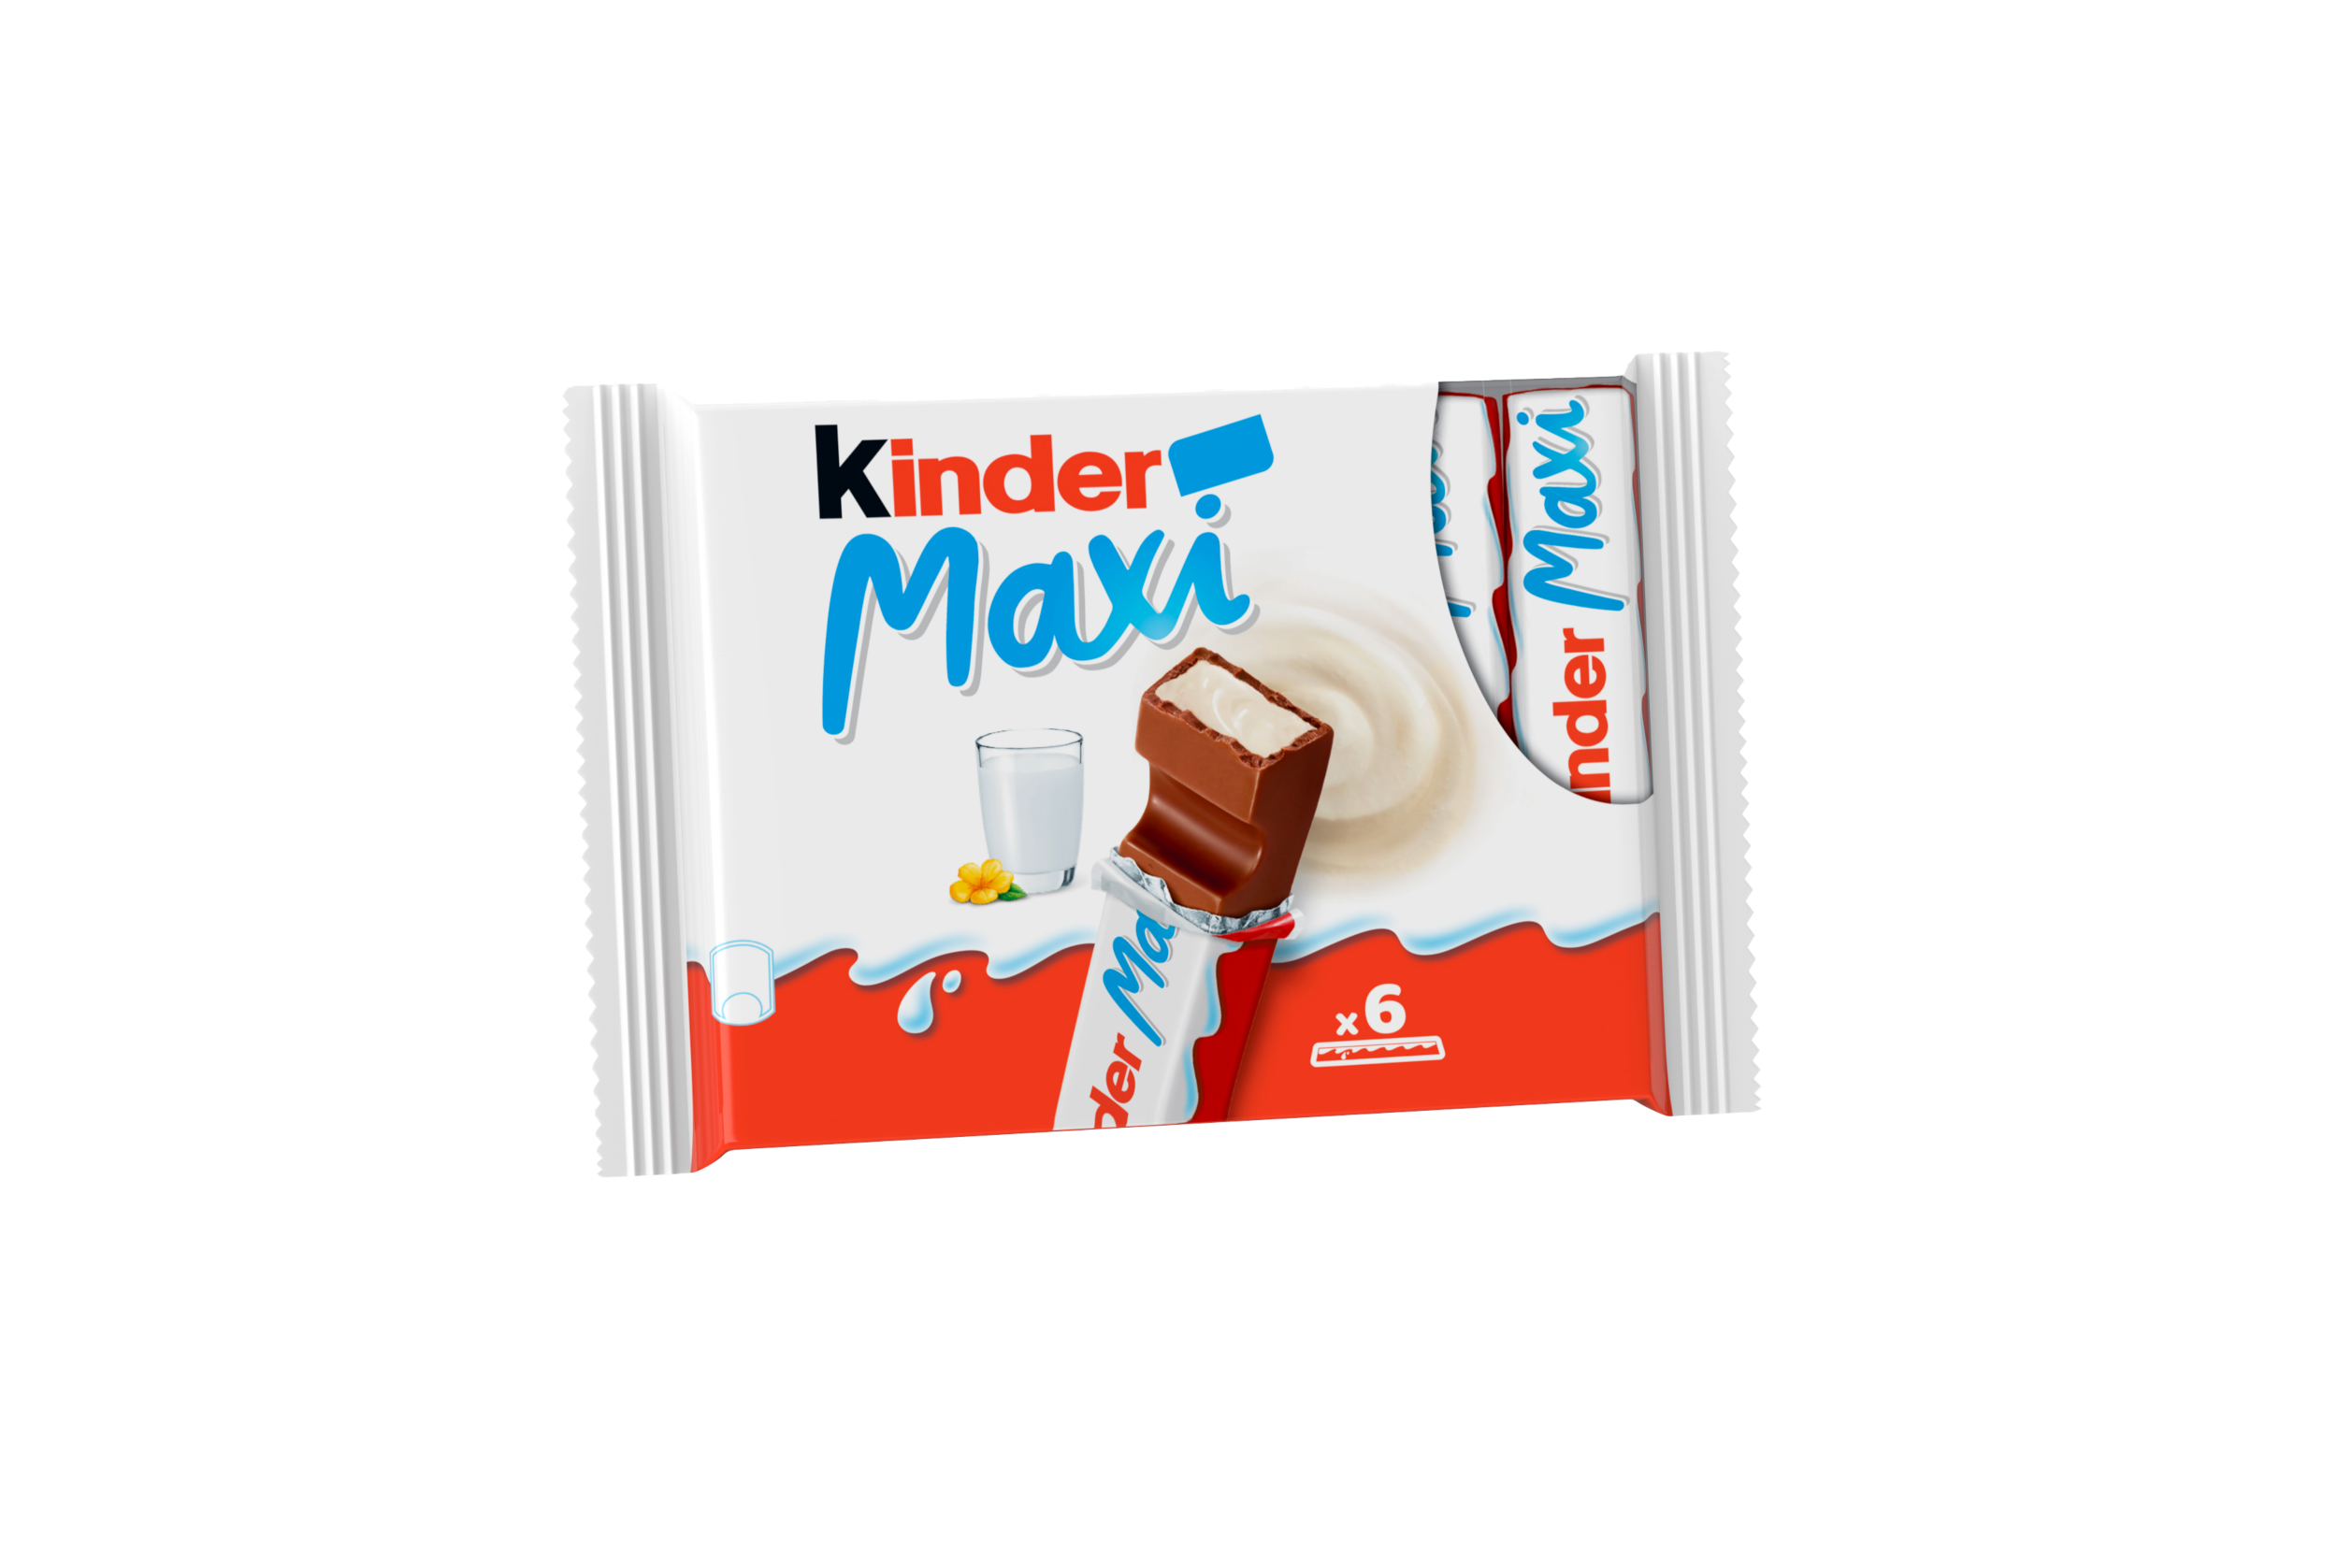 milk chocolate bar kinder maxi t6